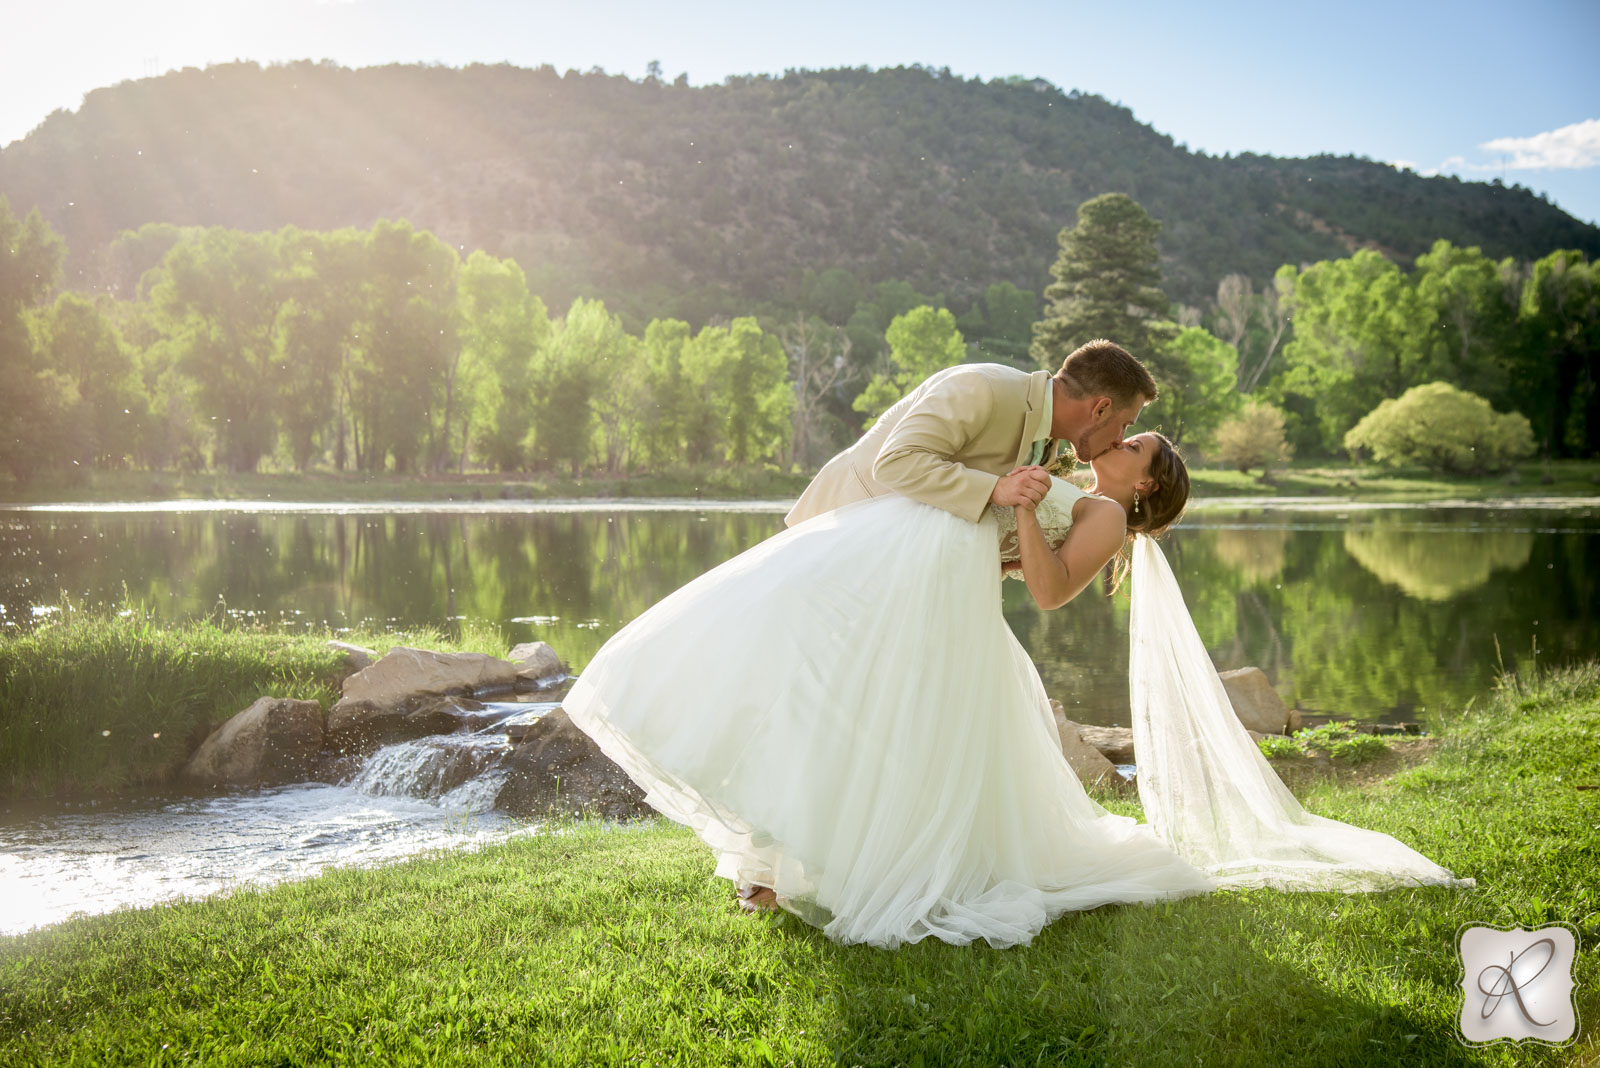 Wedding by Durango Photographer Allison Ragsdale at LePlatt's Pond